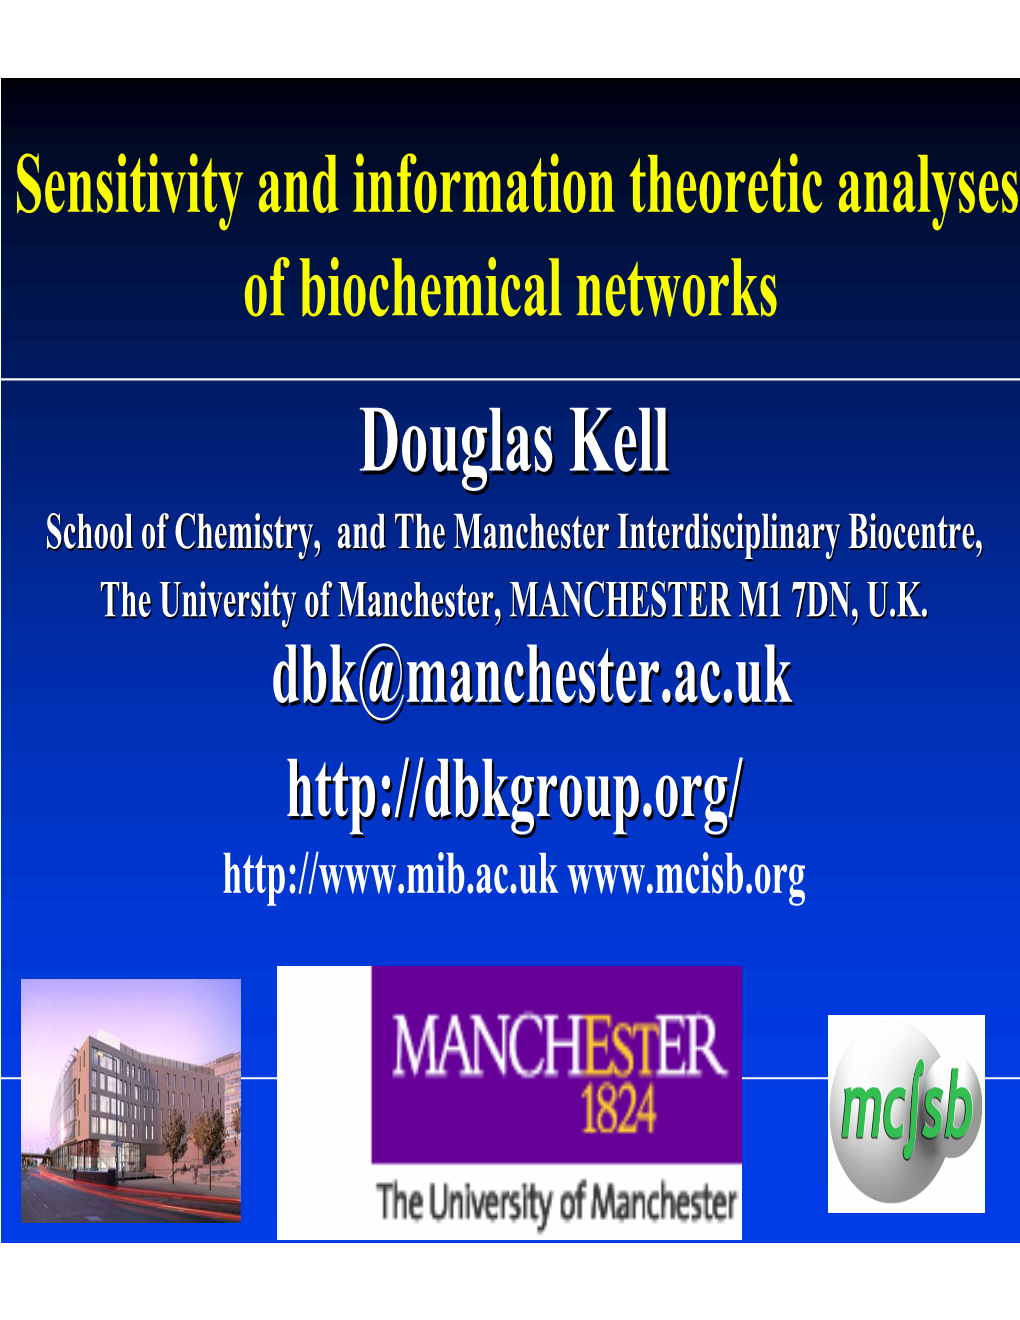 Douglas Kellkell School of Chemistry, and the Manchester Interdisciplinary Biocentre, the University of Manchester, MANCHESTER M1 7DN, U.K